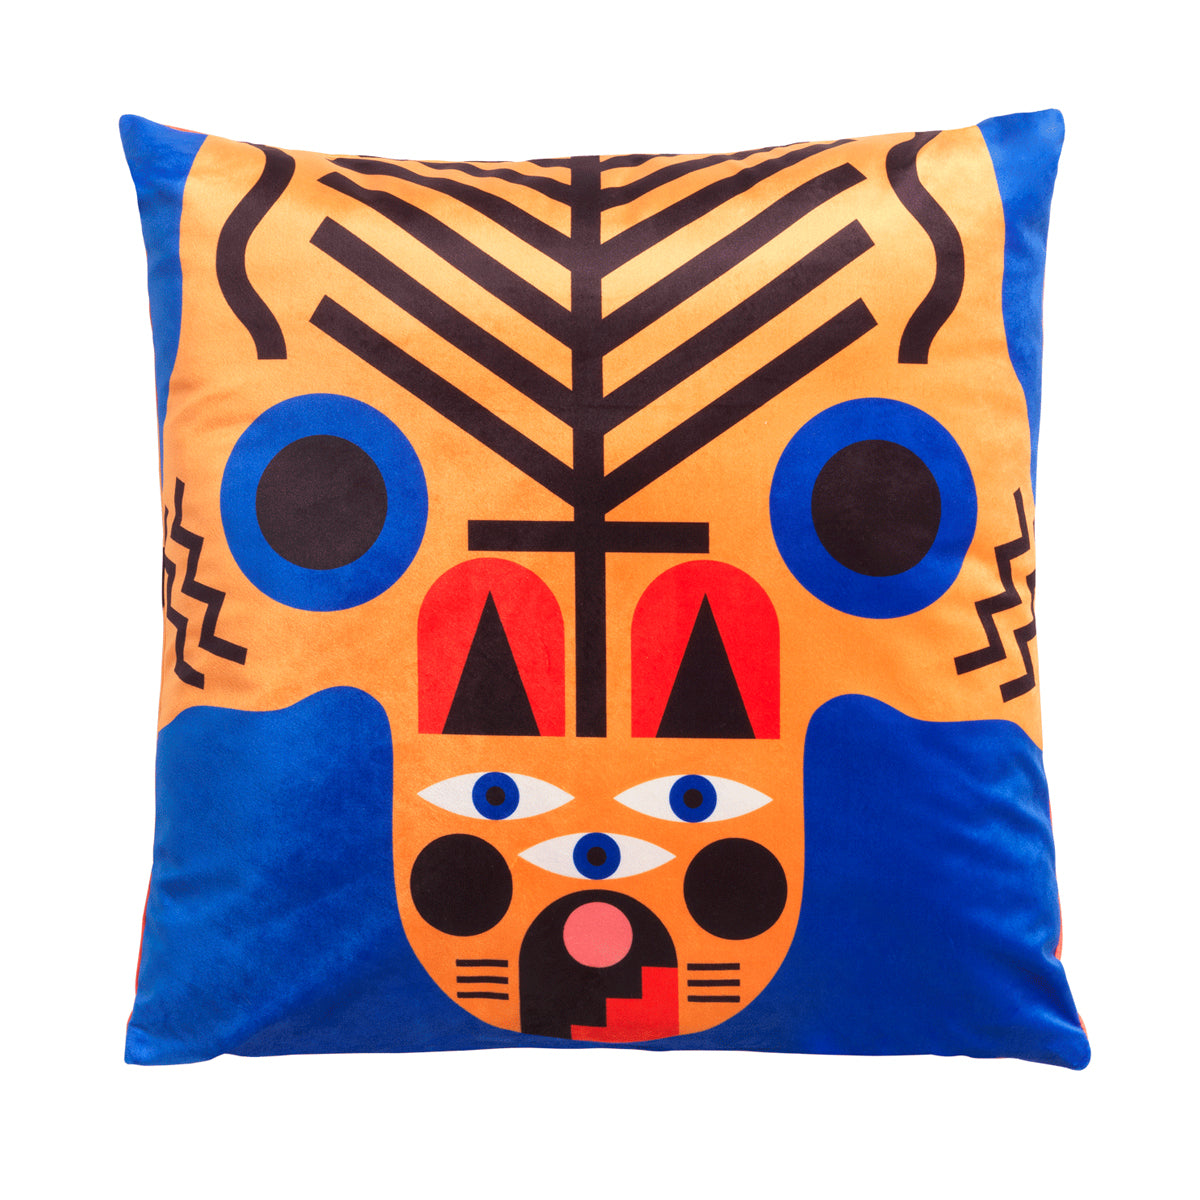 Oggian Italian Tiger Cushion Cover by Marco Oggian